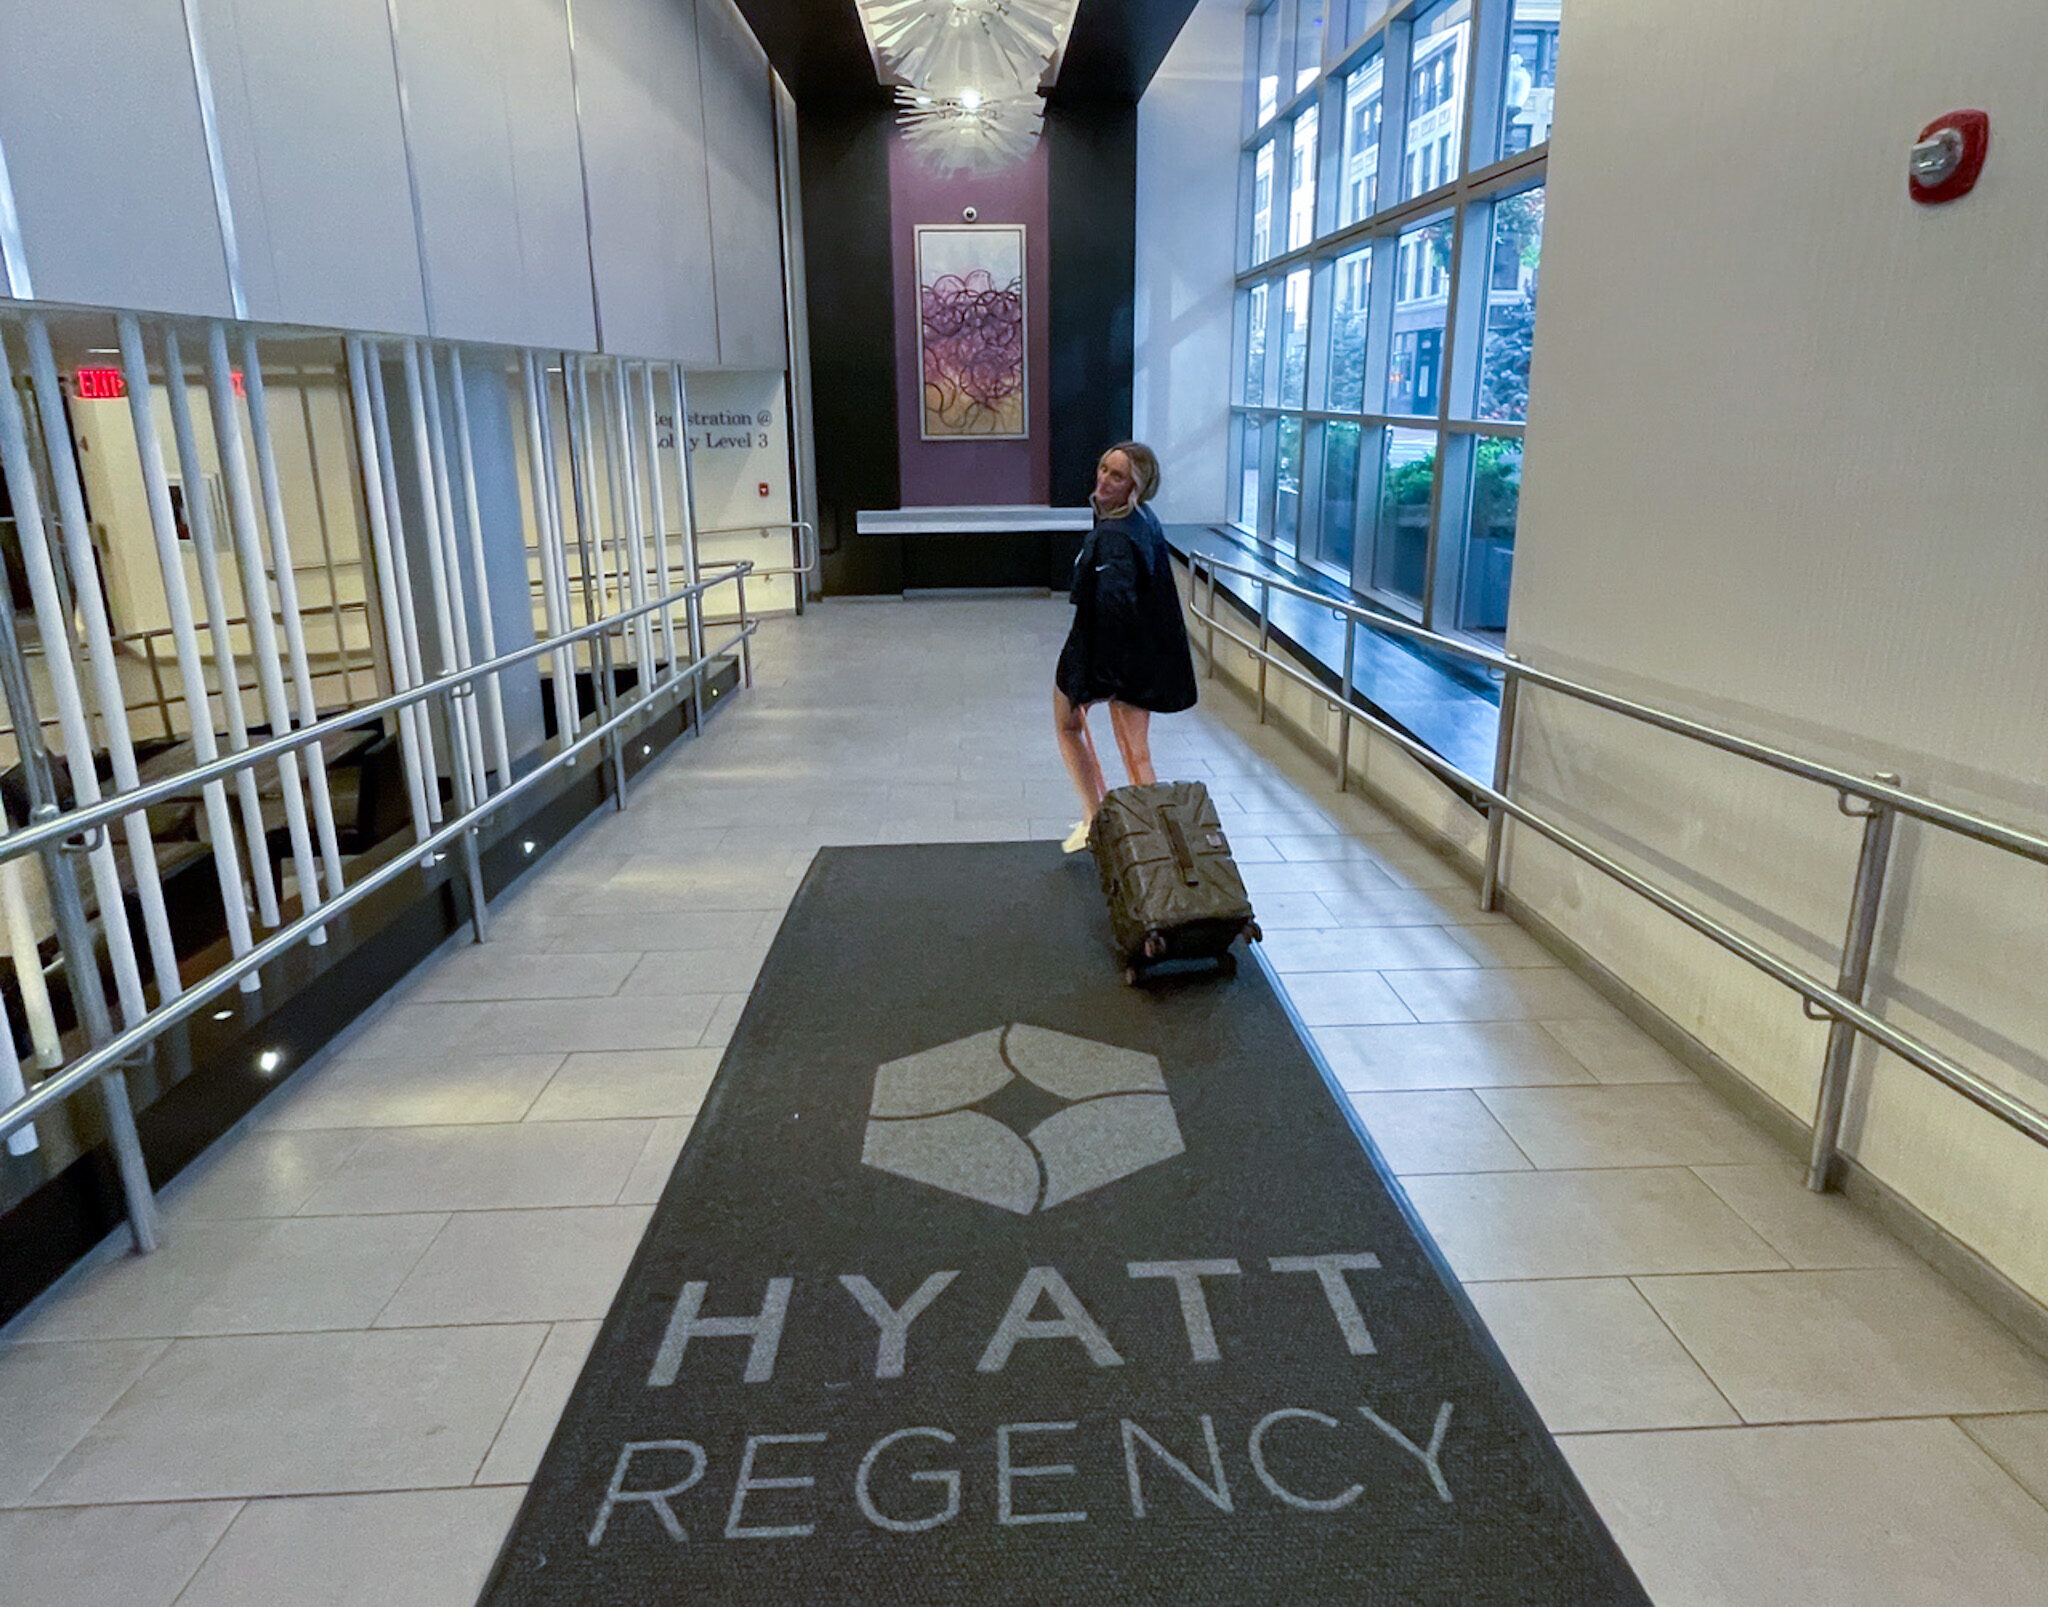 Entering Hyatt hotel with suitcase